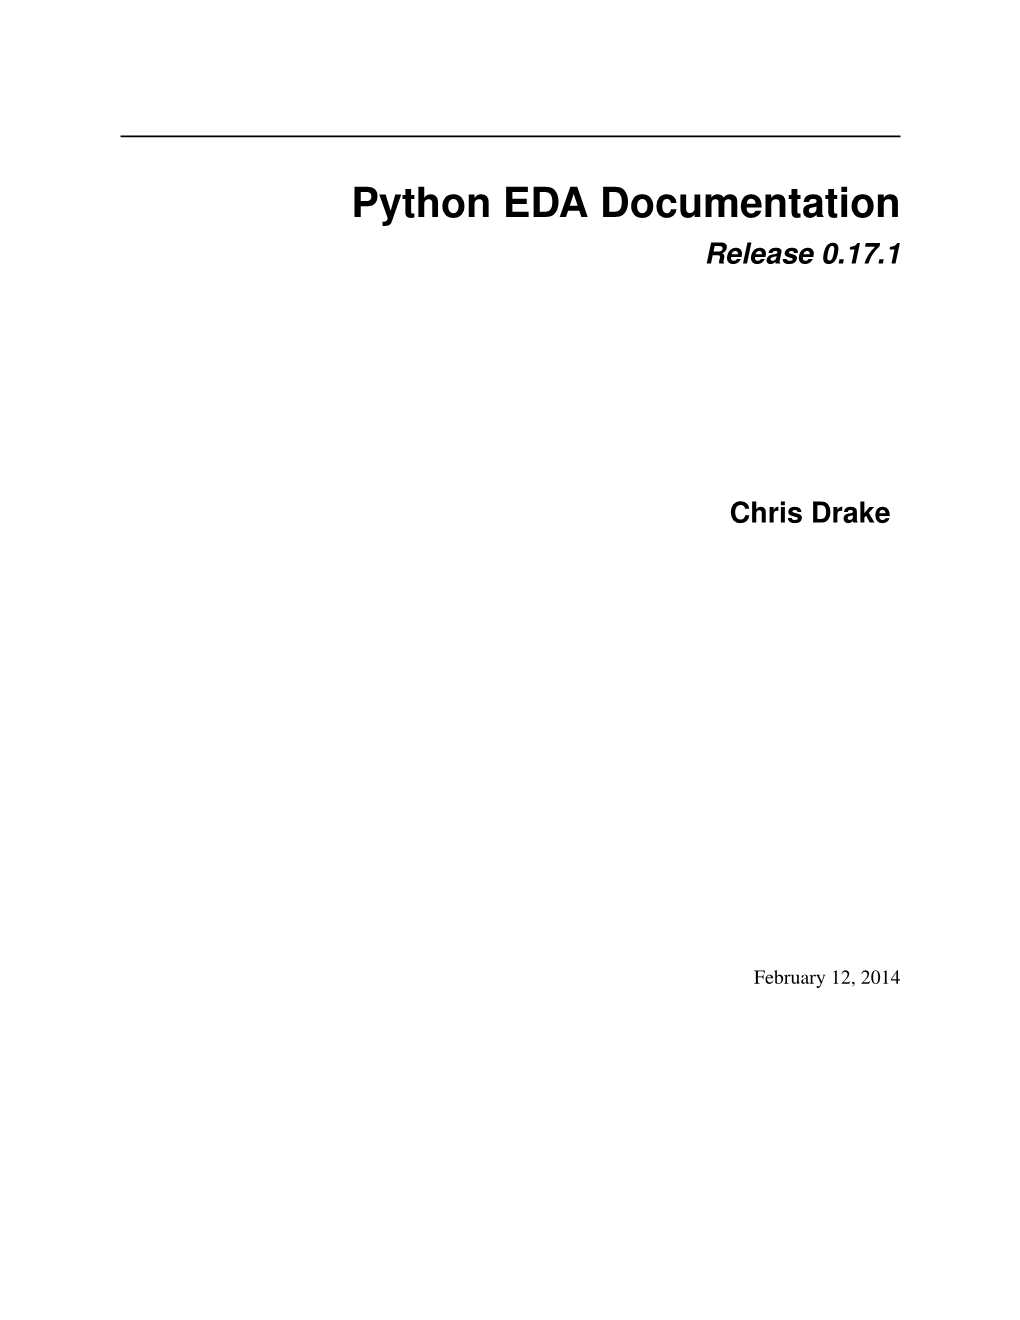 Python EDA Documentation Release 0.17.1